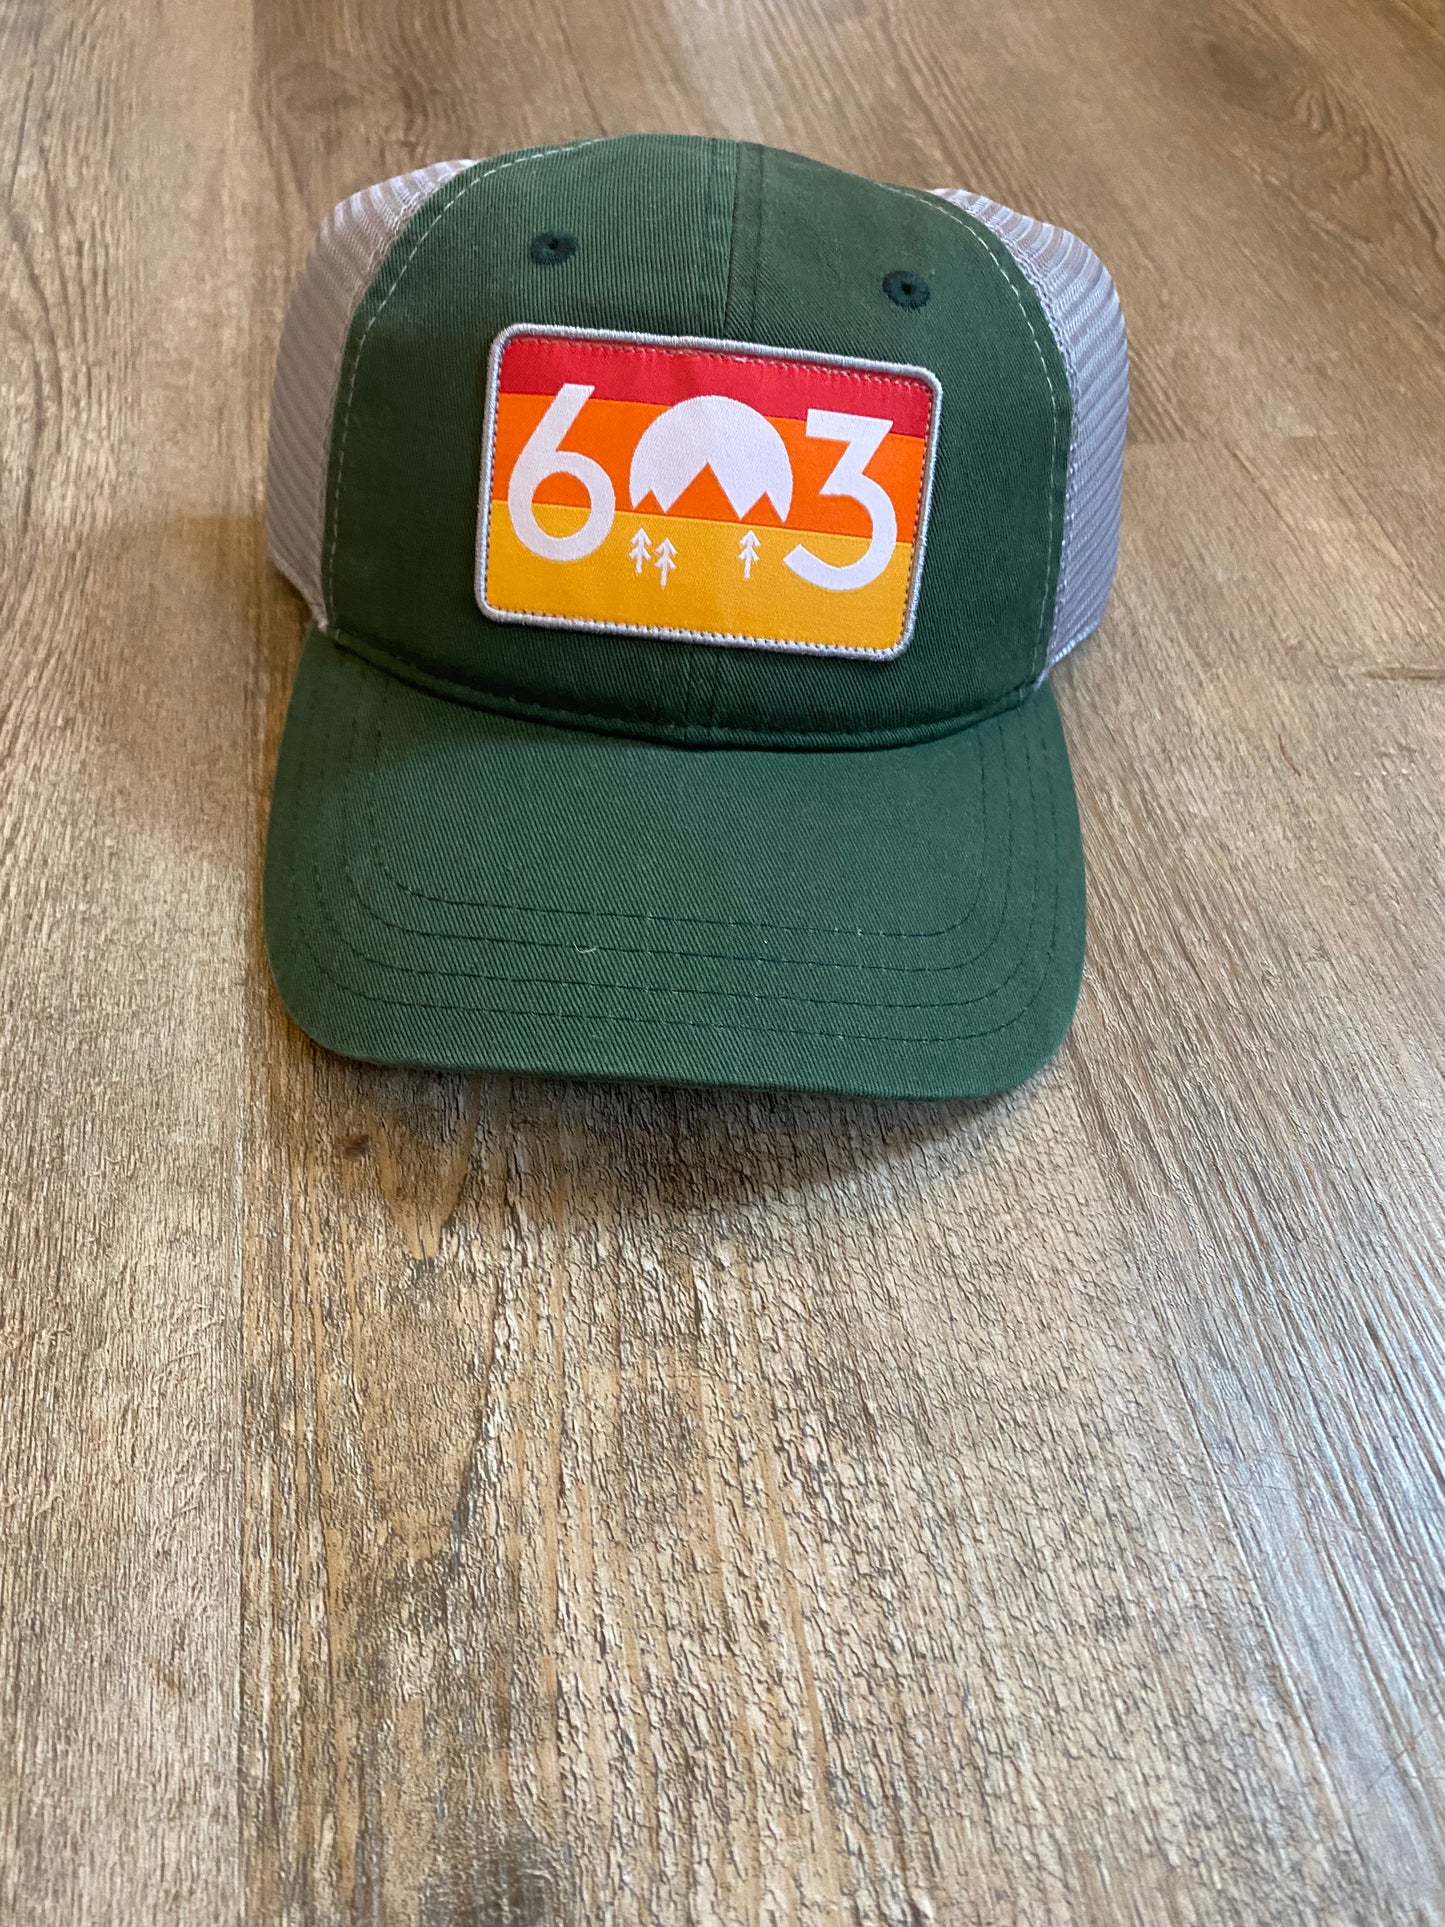 Sunset 603 Trucker Hat